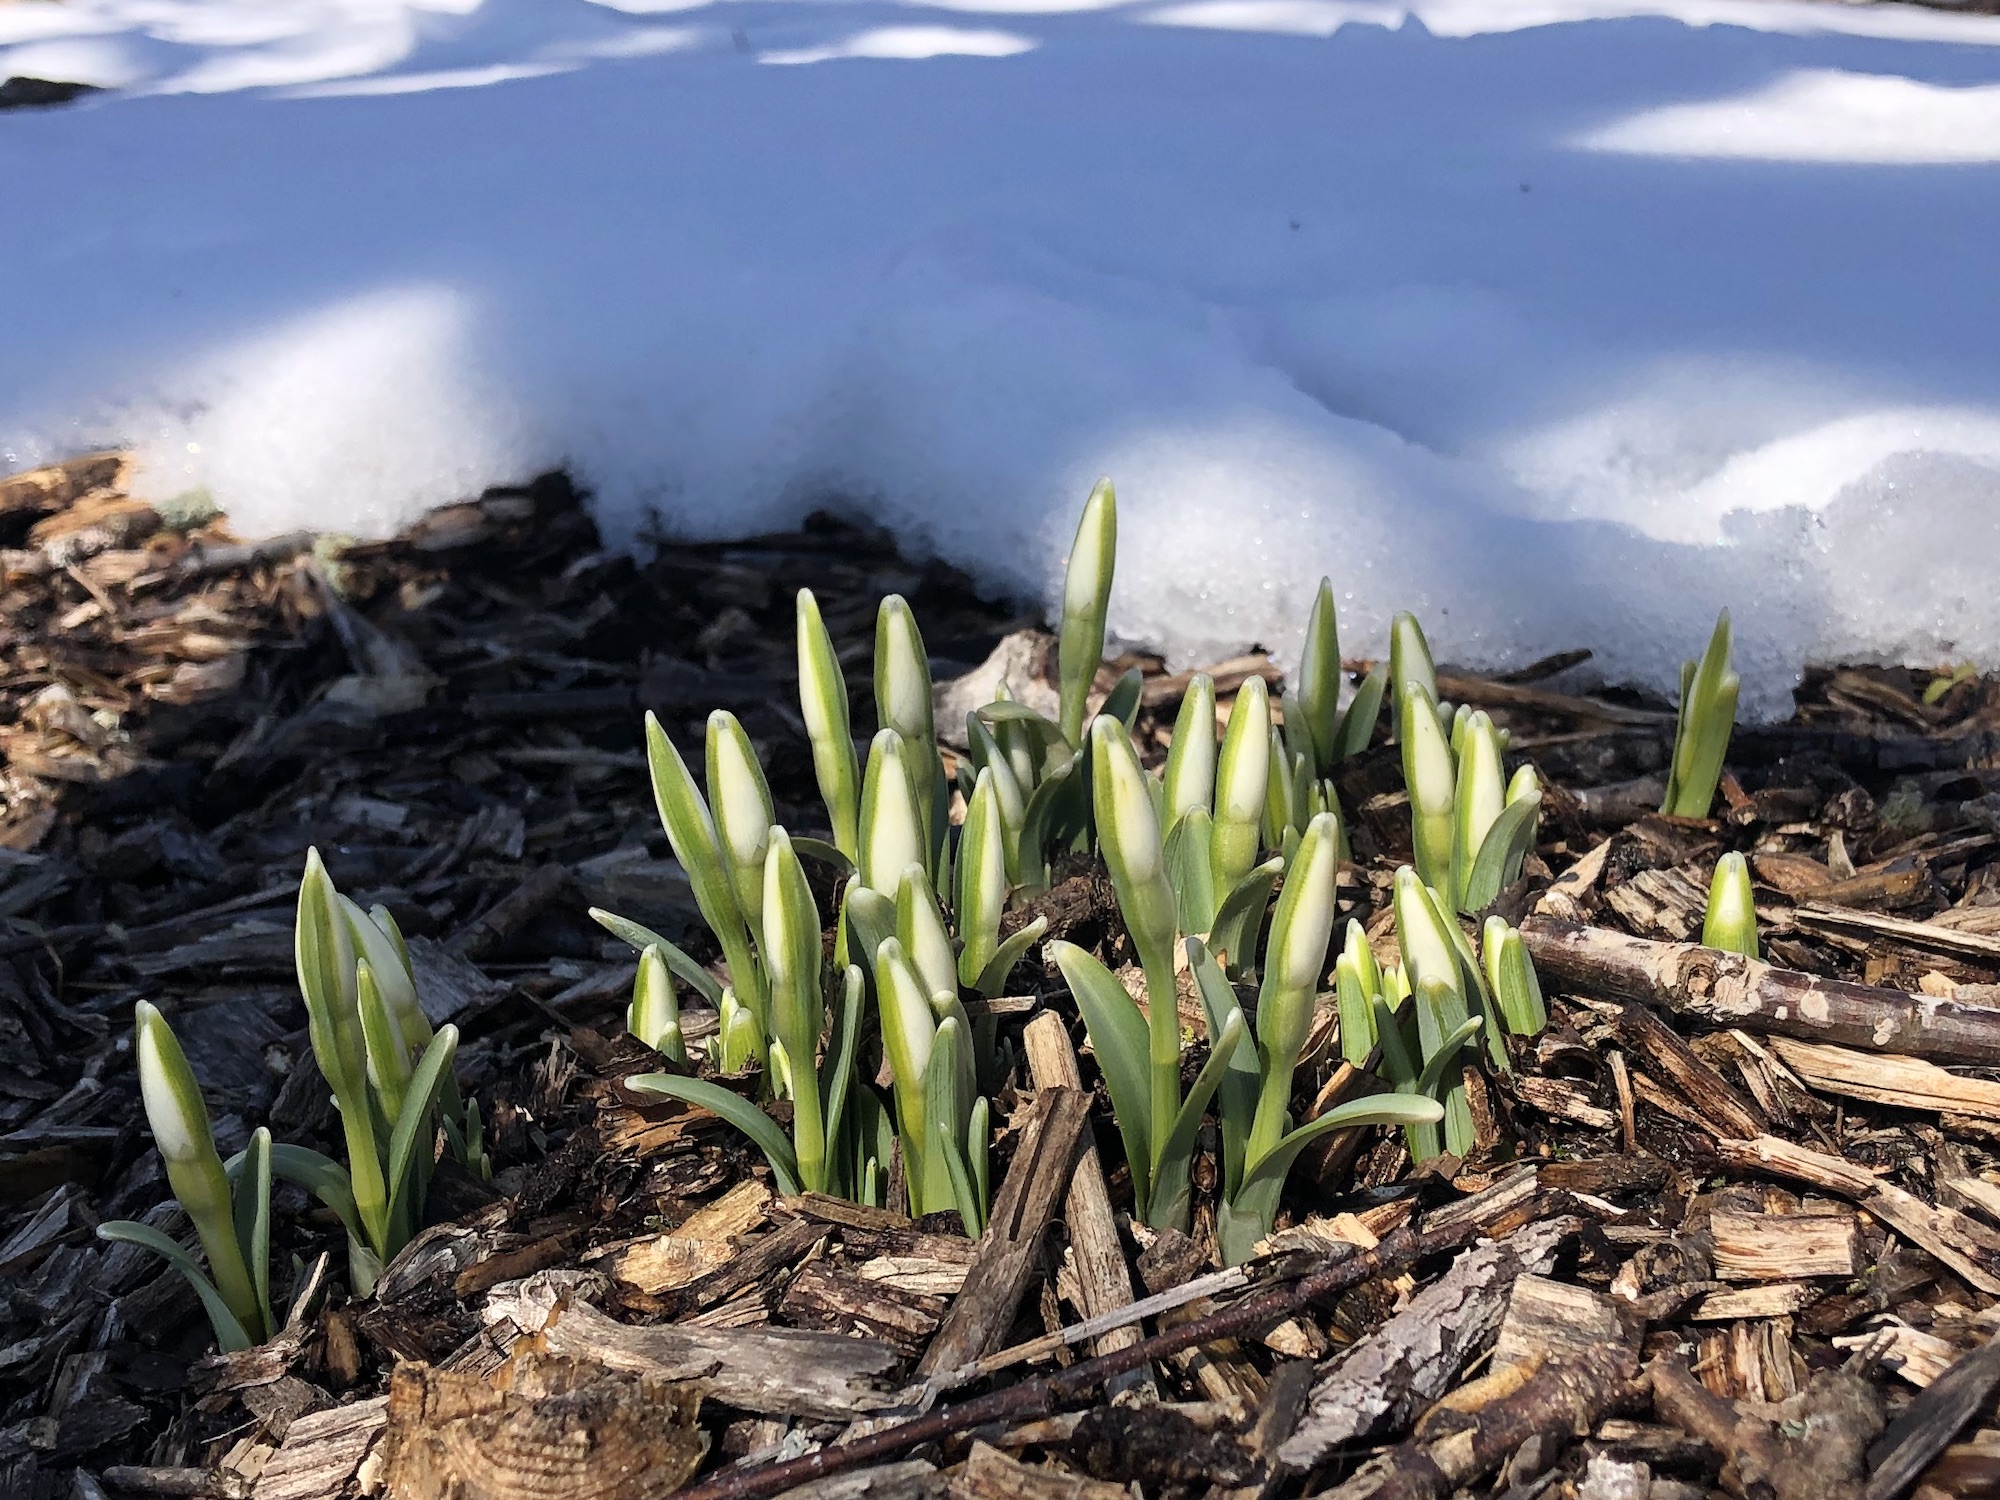 Snowdrops in the University of Wisconsin Arbortetum Longenecker Gardens in Madison Wisconsin on March 9, 2022.